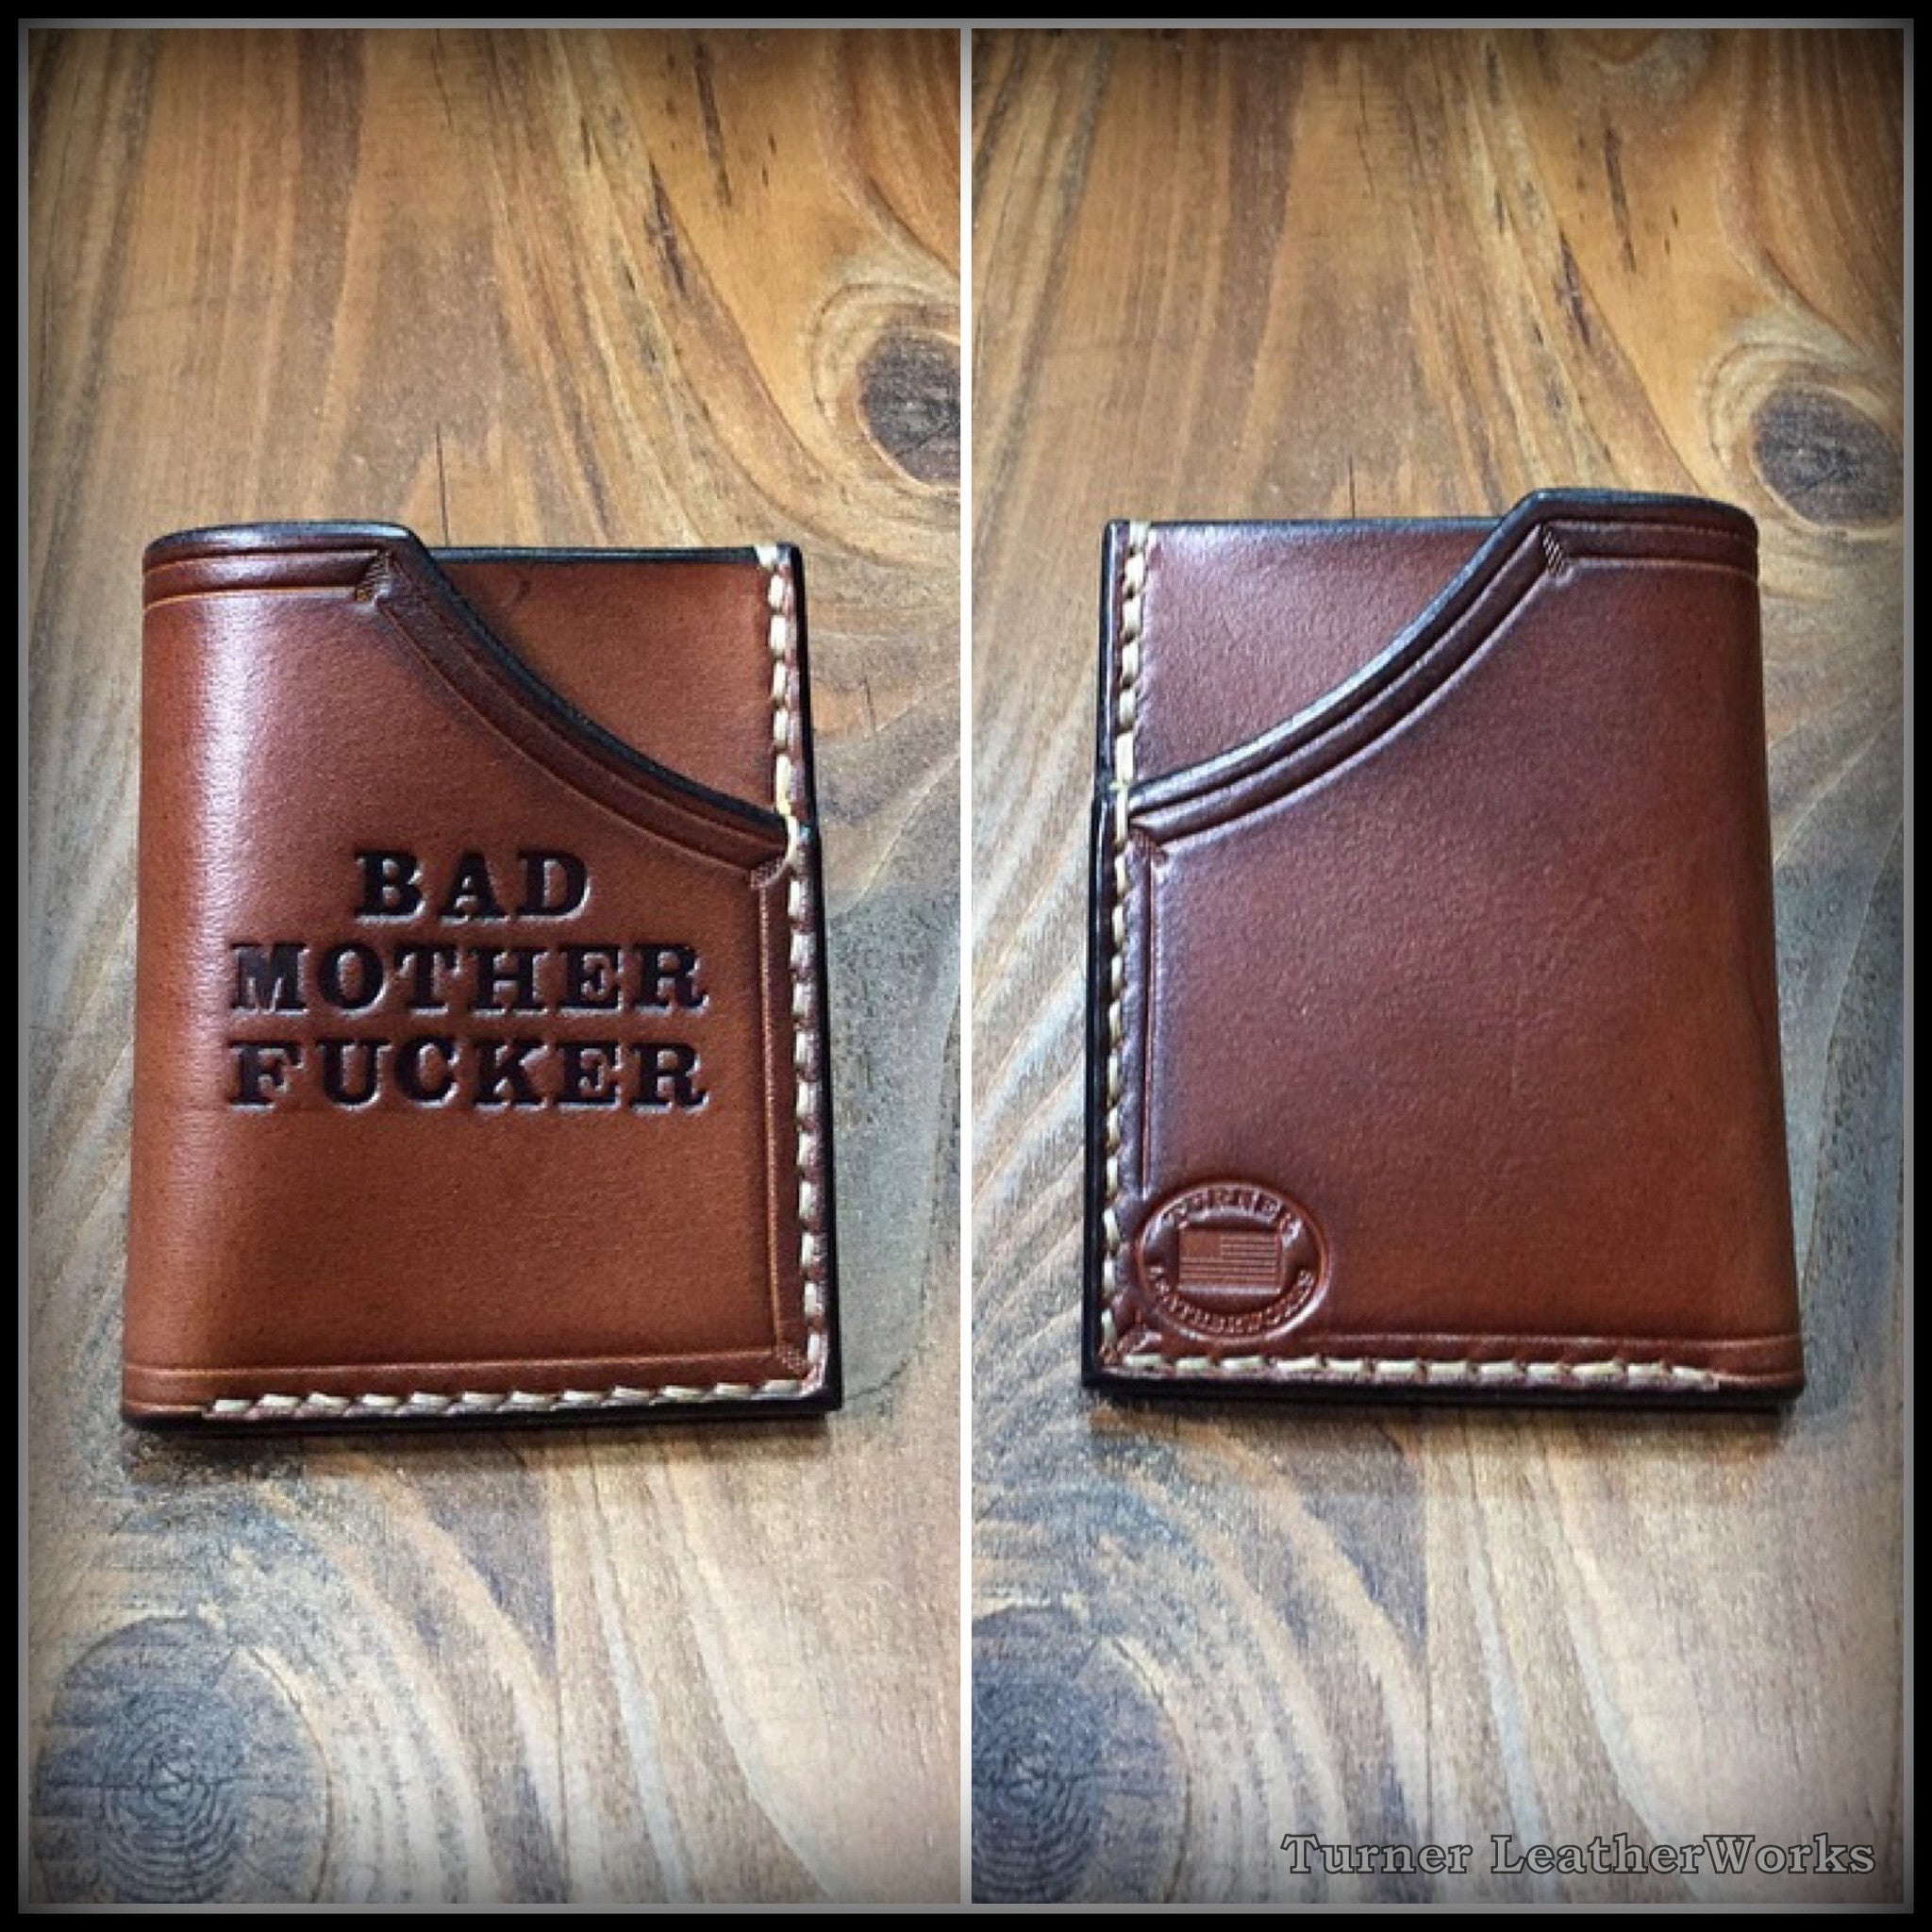 Fucker Antique Finish Brown Slim Billfold Wallet by Mascorro Leather